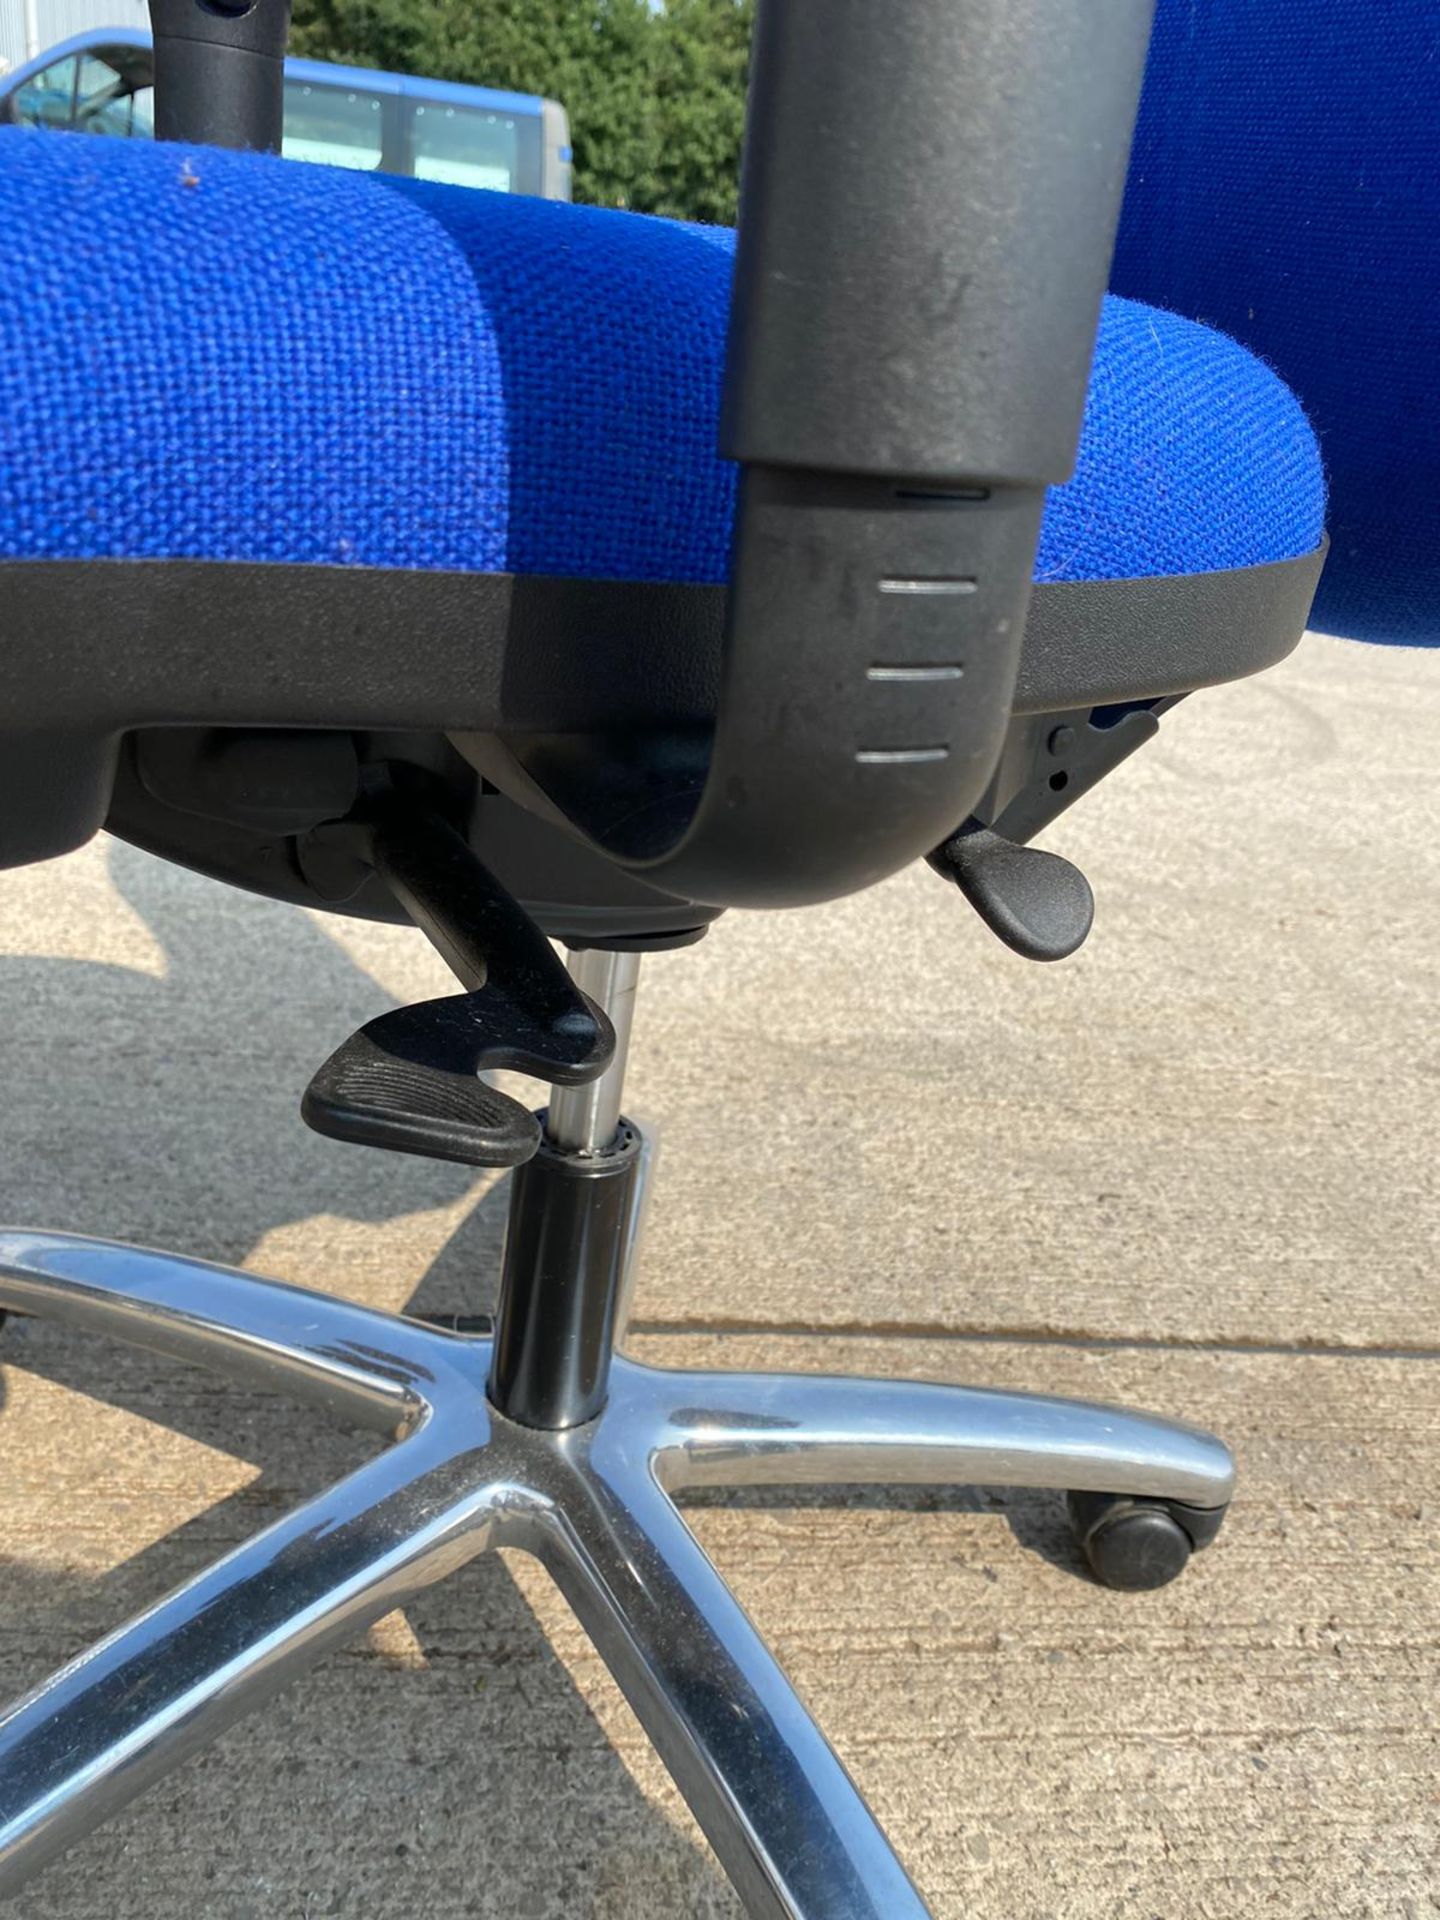 1 x Status Therapod 5250 Chair in Blue - Used Condition - Location: Altrincham WA14 - Image 9 of 10